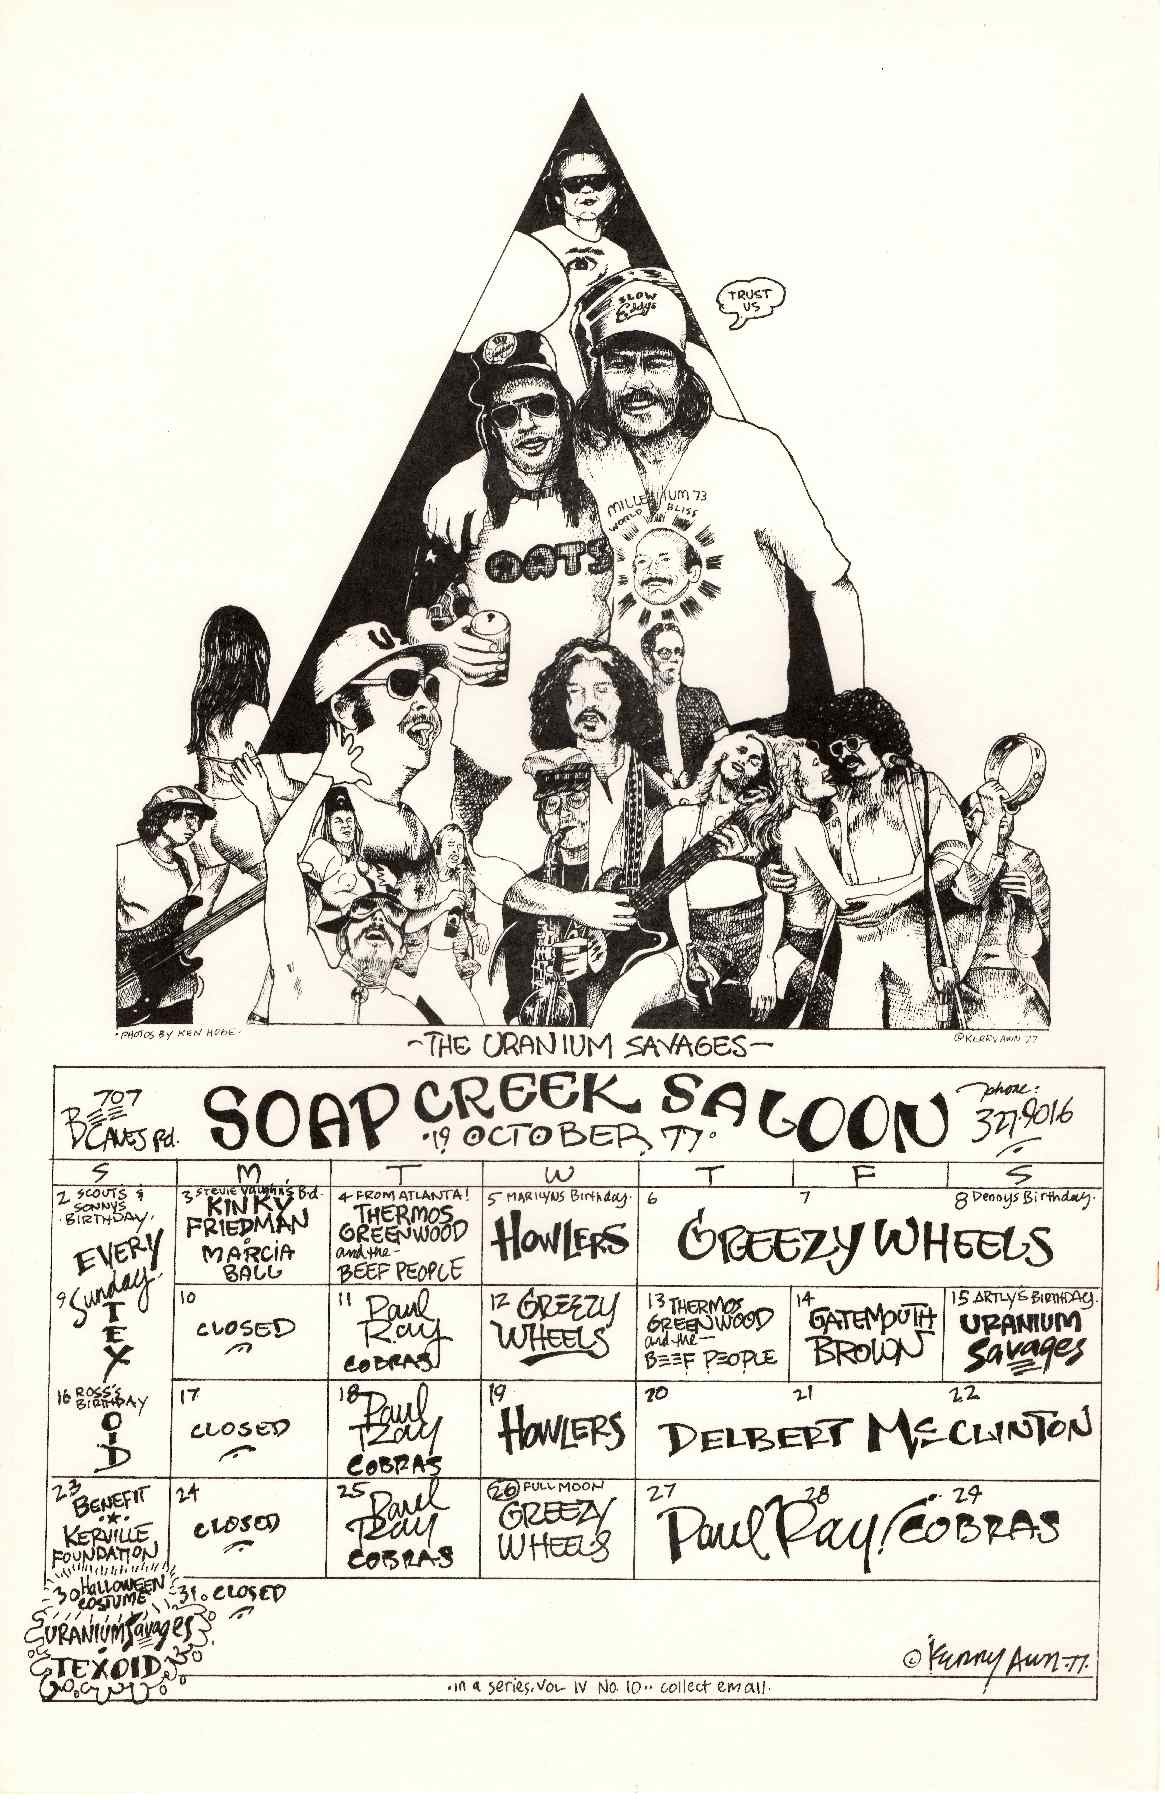 1977.10.October Calendar.Soap Creek Saloon.Awn.JPG